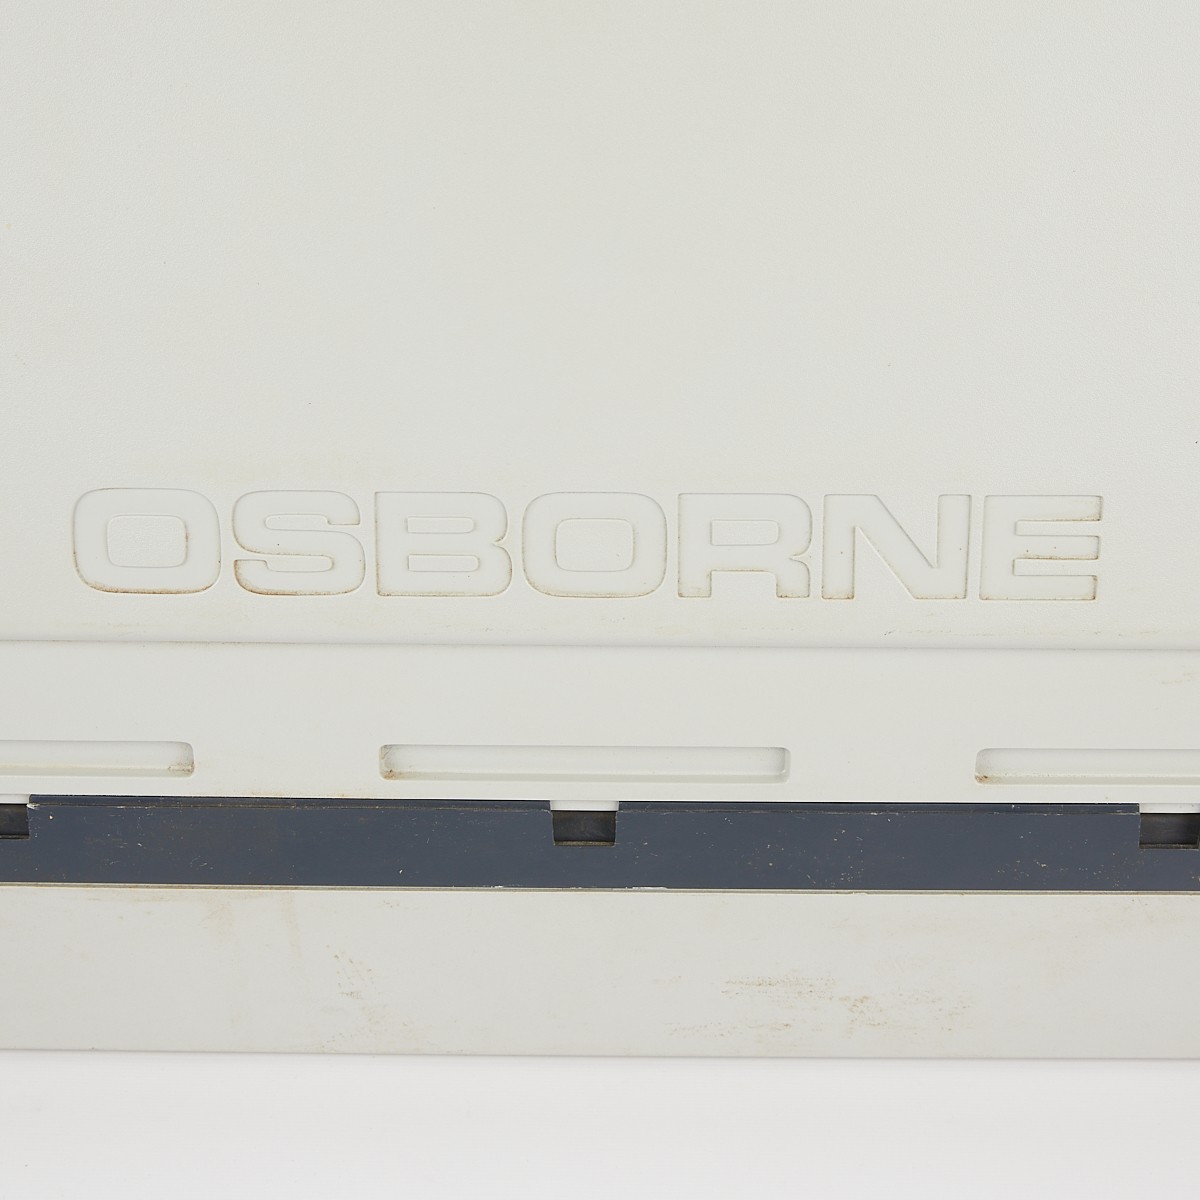 Vintage Osborn Model OCC-1 Microcomputer 1981 - Image 18 of 21